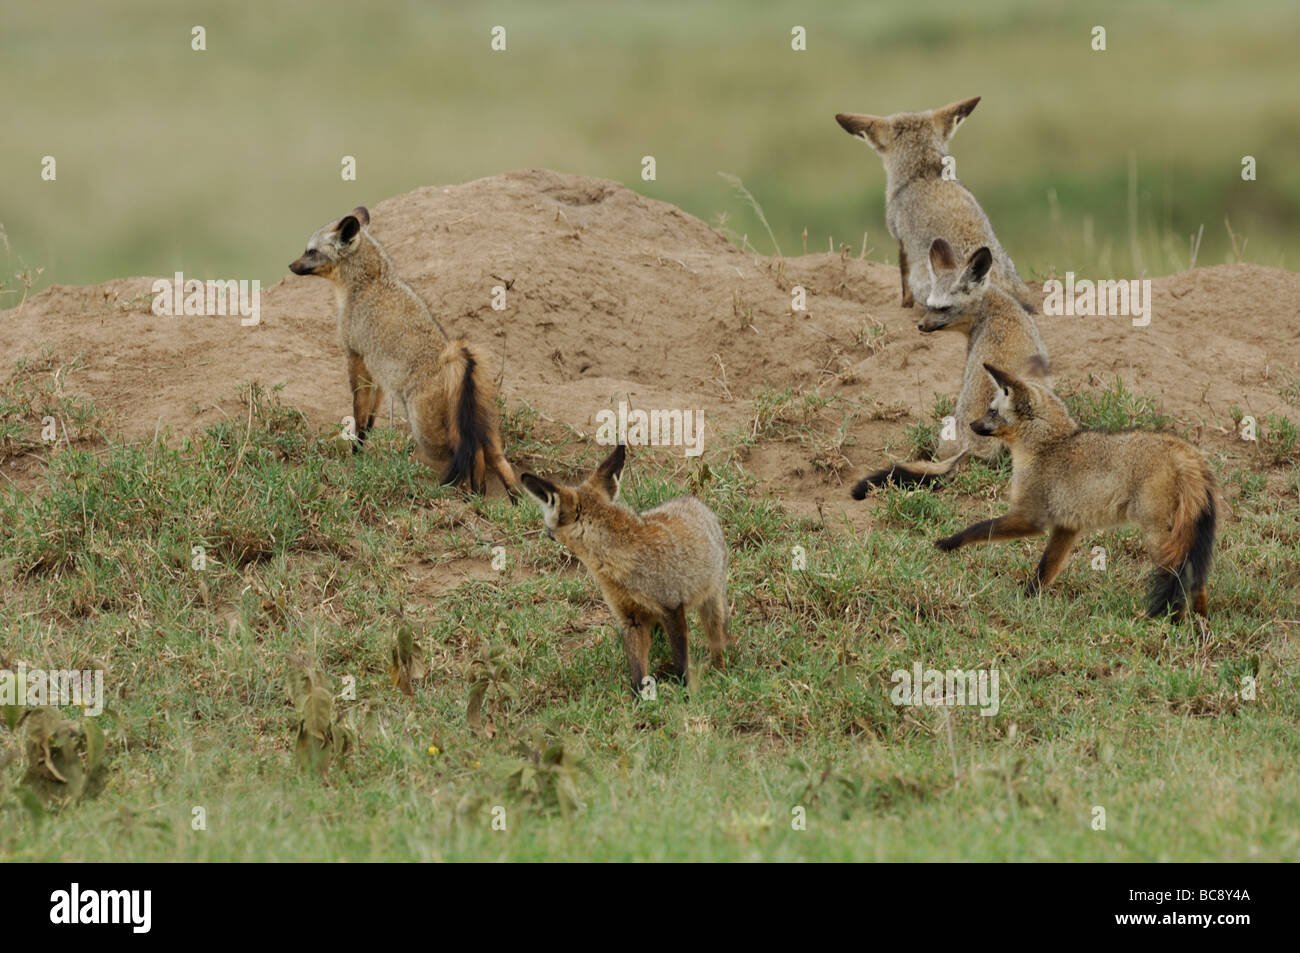 Stock Foto von Den Hieb-eared Fuchs Welpen, Serengeti Nationalpark, Tansania, Februar 2009. Stockfoto